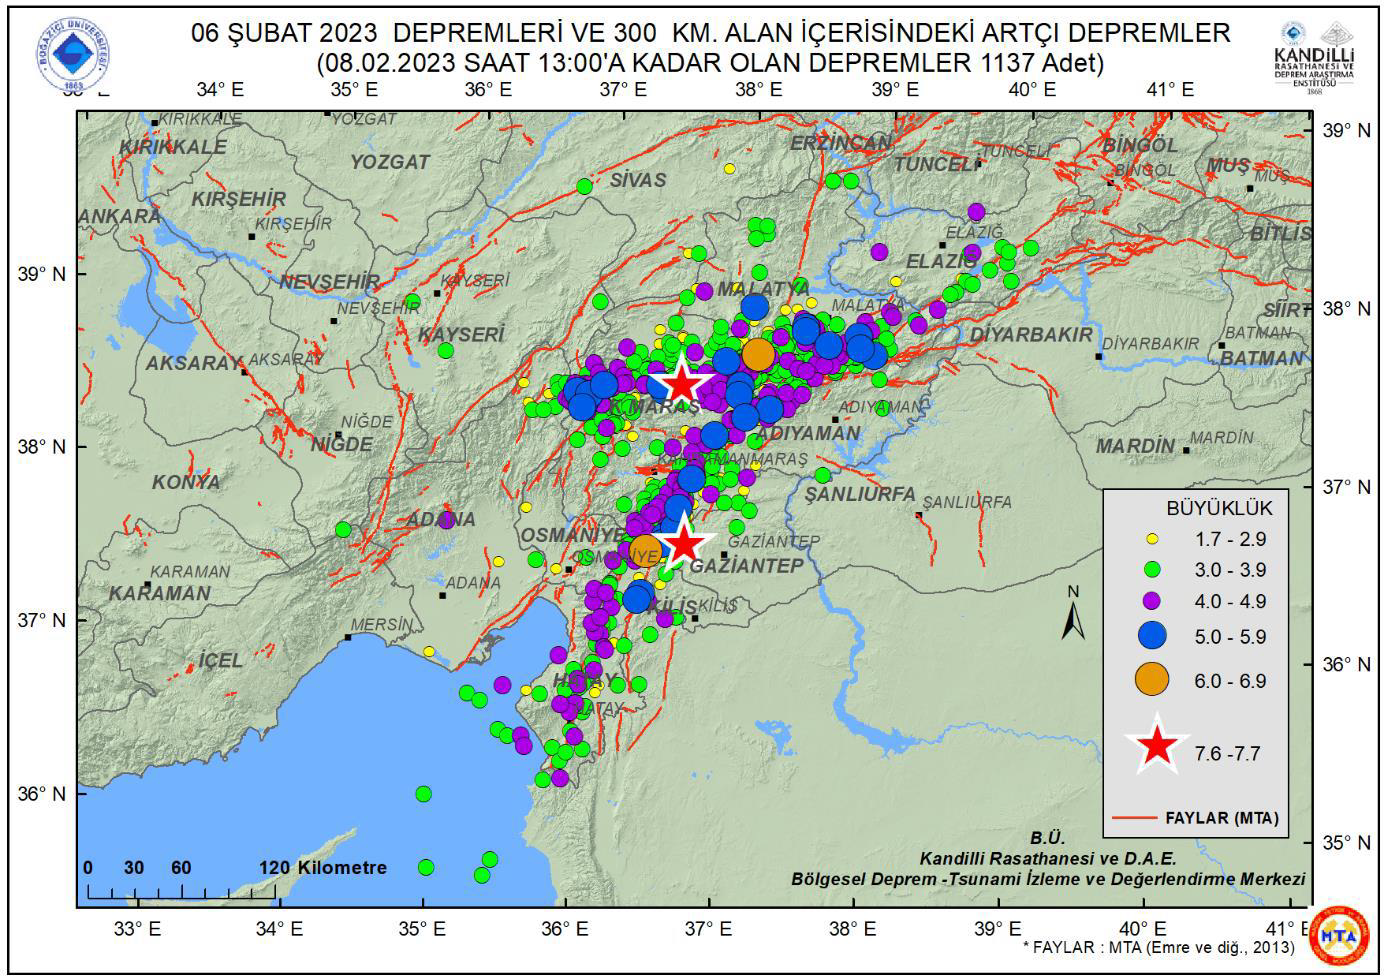 Deadly and Damaging Earthquake in Türkiye and Syrian Boarder, Tsunami-related Sea Level Anomalies Detected in Türkiye 